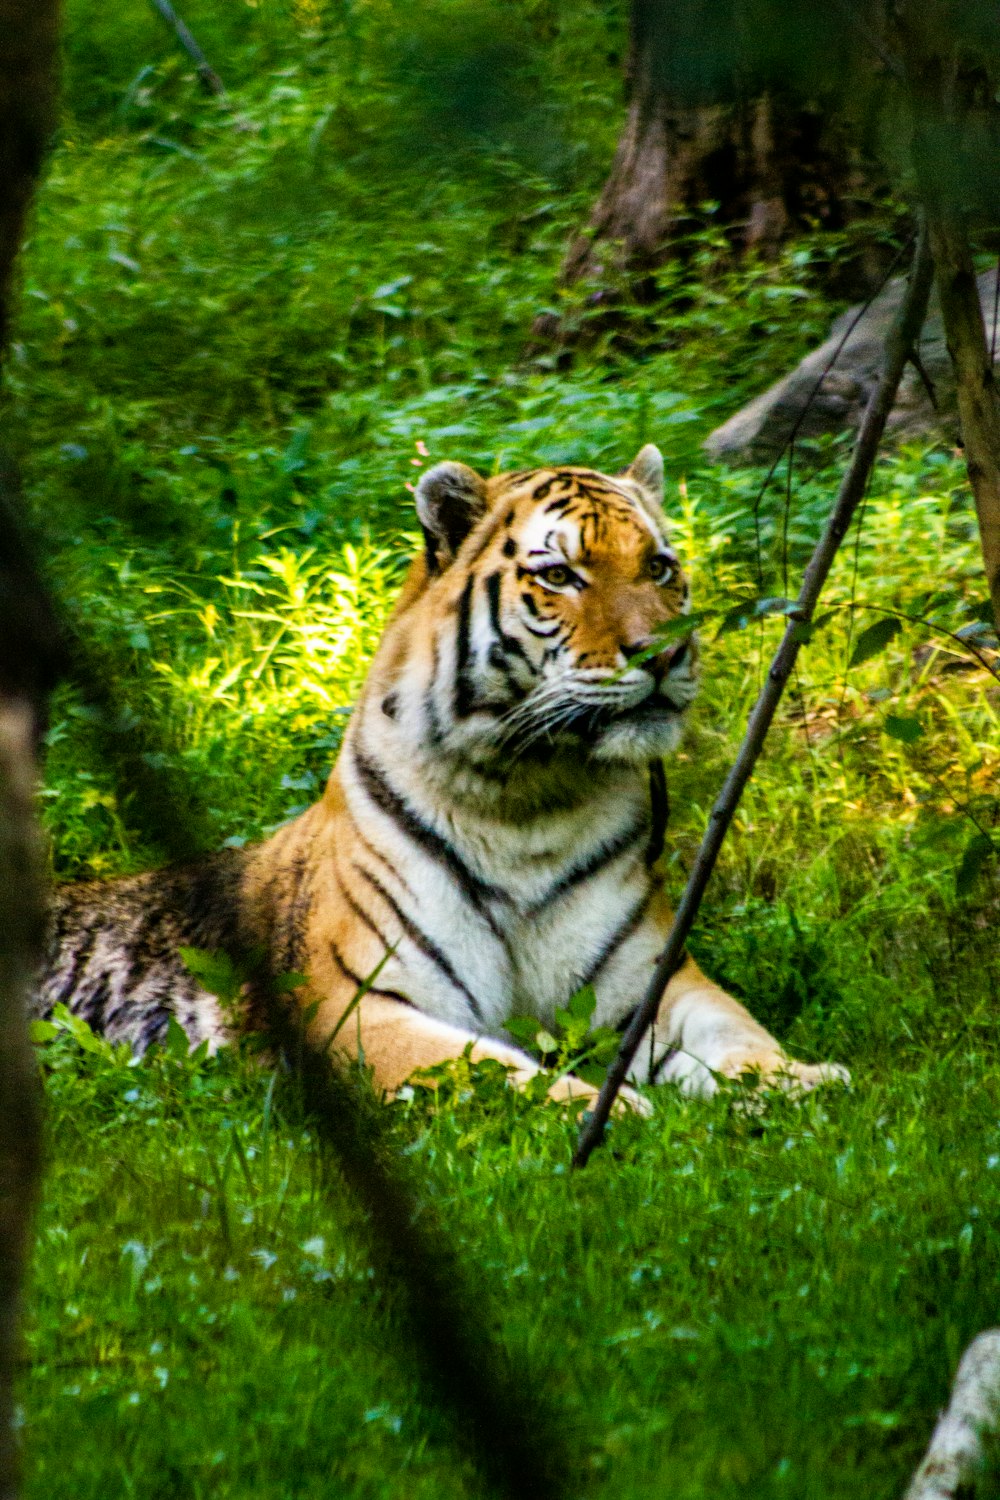 tiger resting on green grass